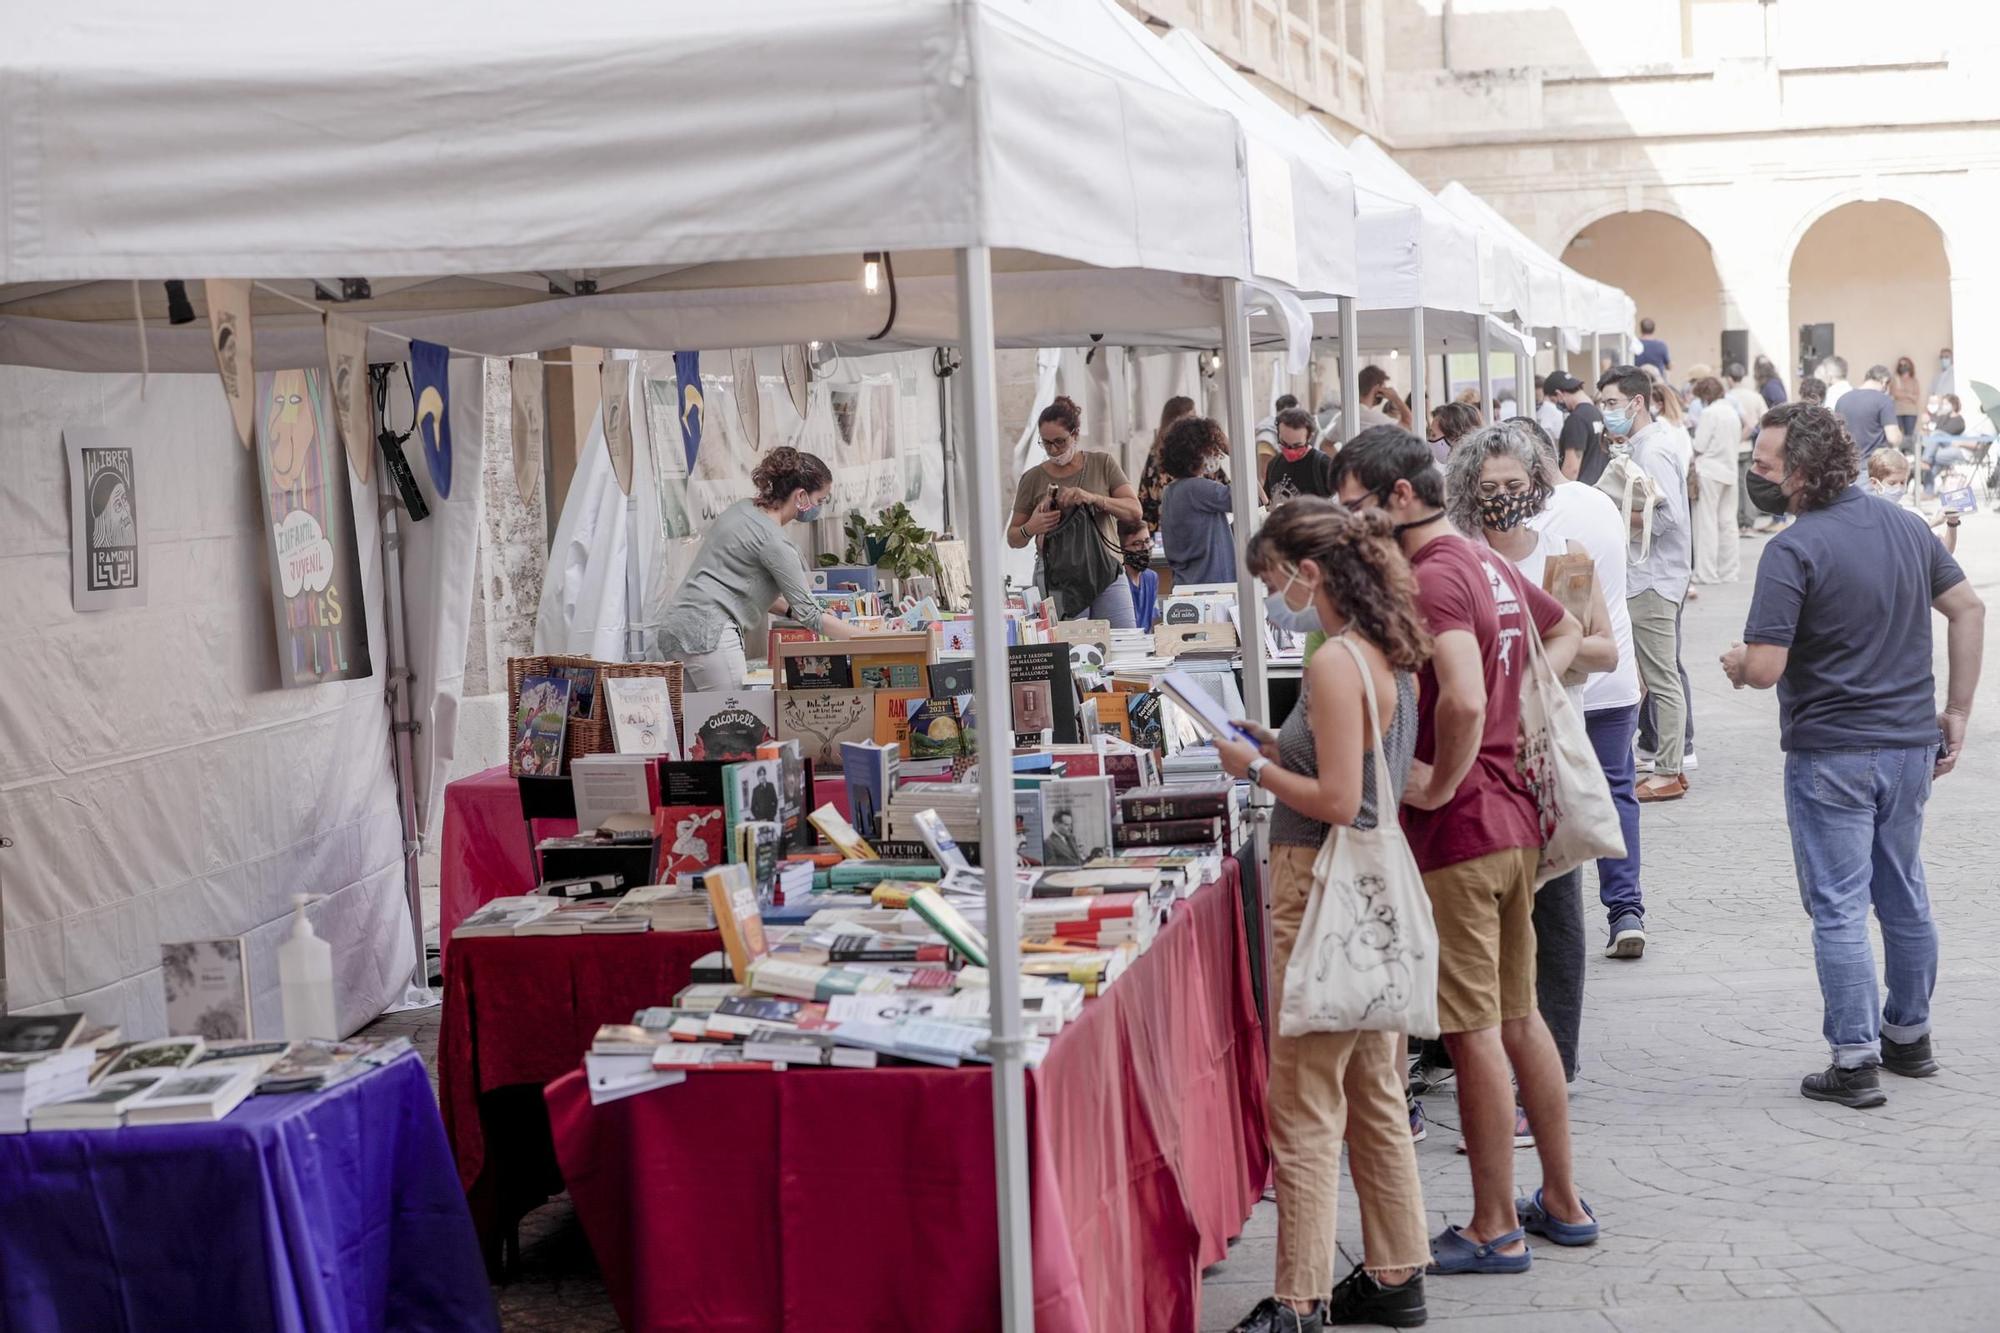 Palma celebra la Fira del Llibre